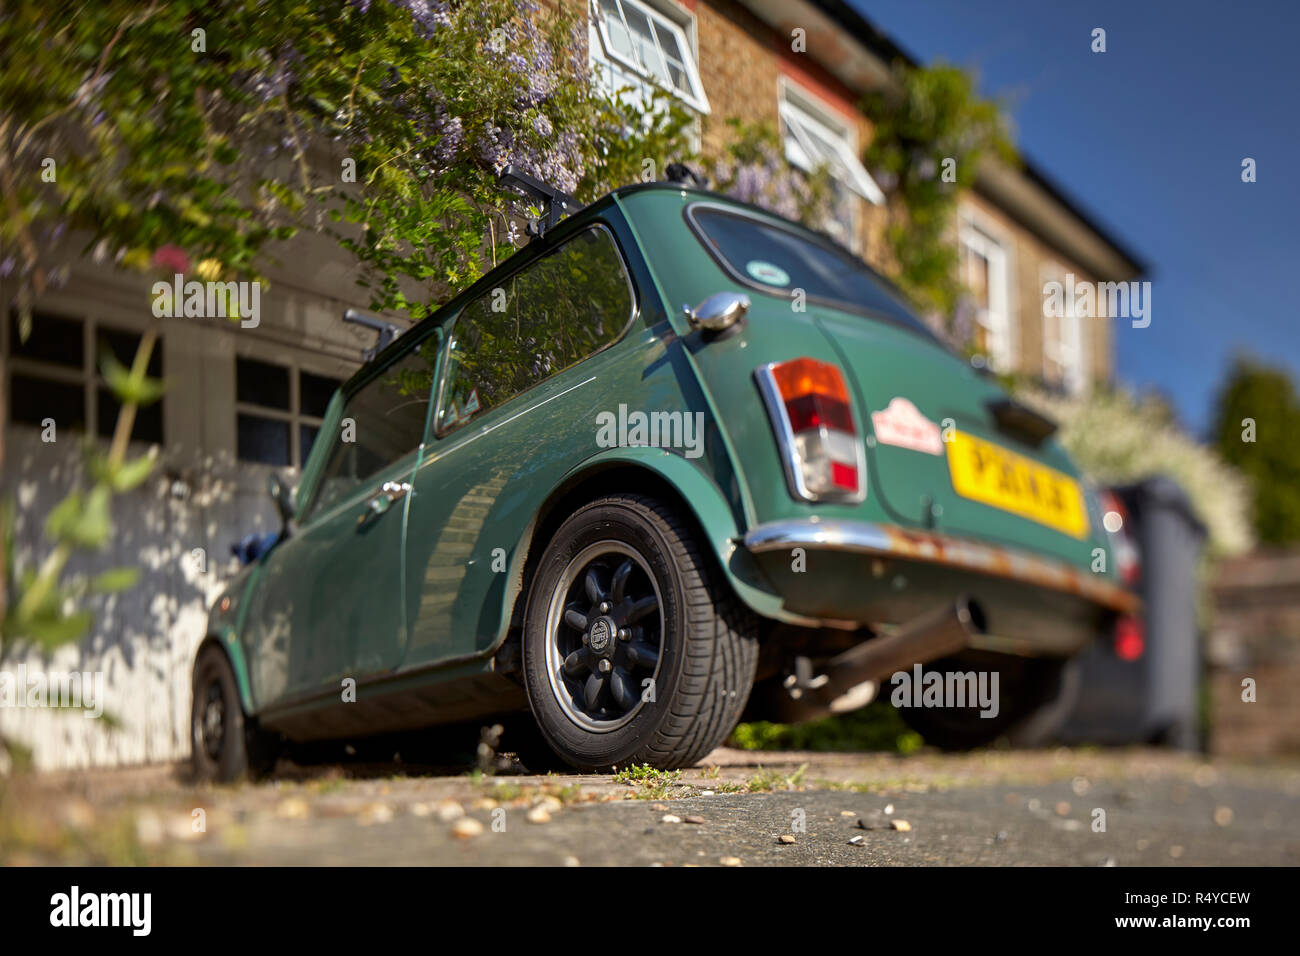 British Racing Green Mini Cooper Foto stock - Alamy